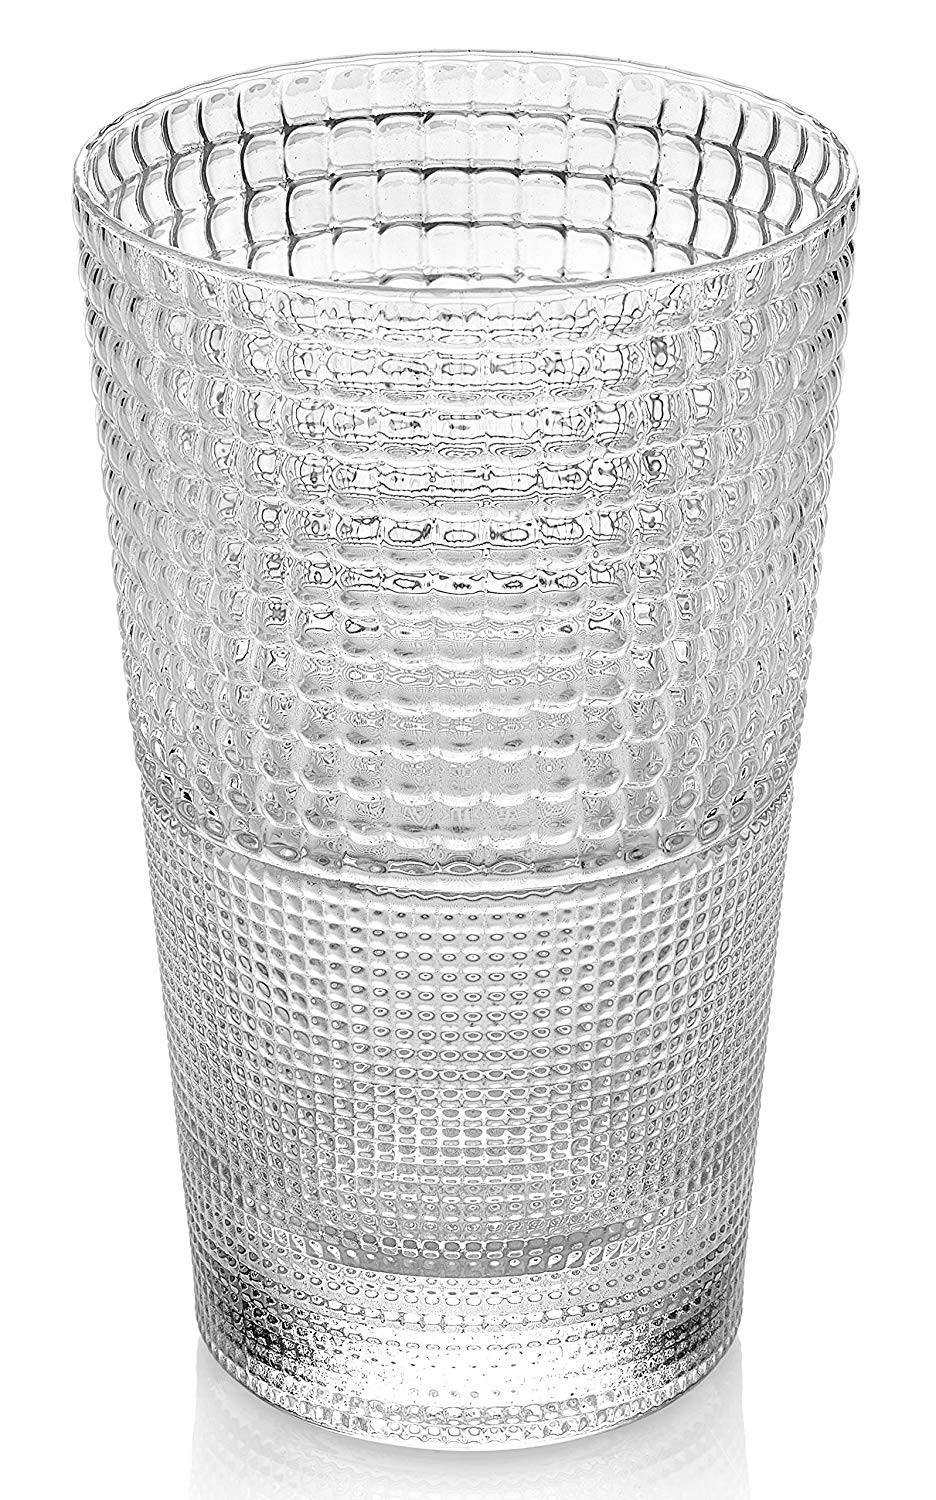 18 Great 6x6 Cylinder Vase 2024 free download 6x6 cylinder vase of amazon com ivv glassware speedy cooler glass set of 6 13 1 2 oz pertaining to amazon com ivv glassware speedy cooler glass set of 6 13 1 2 oz clear kitchen dining